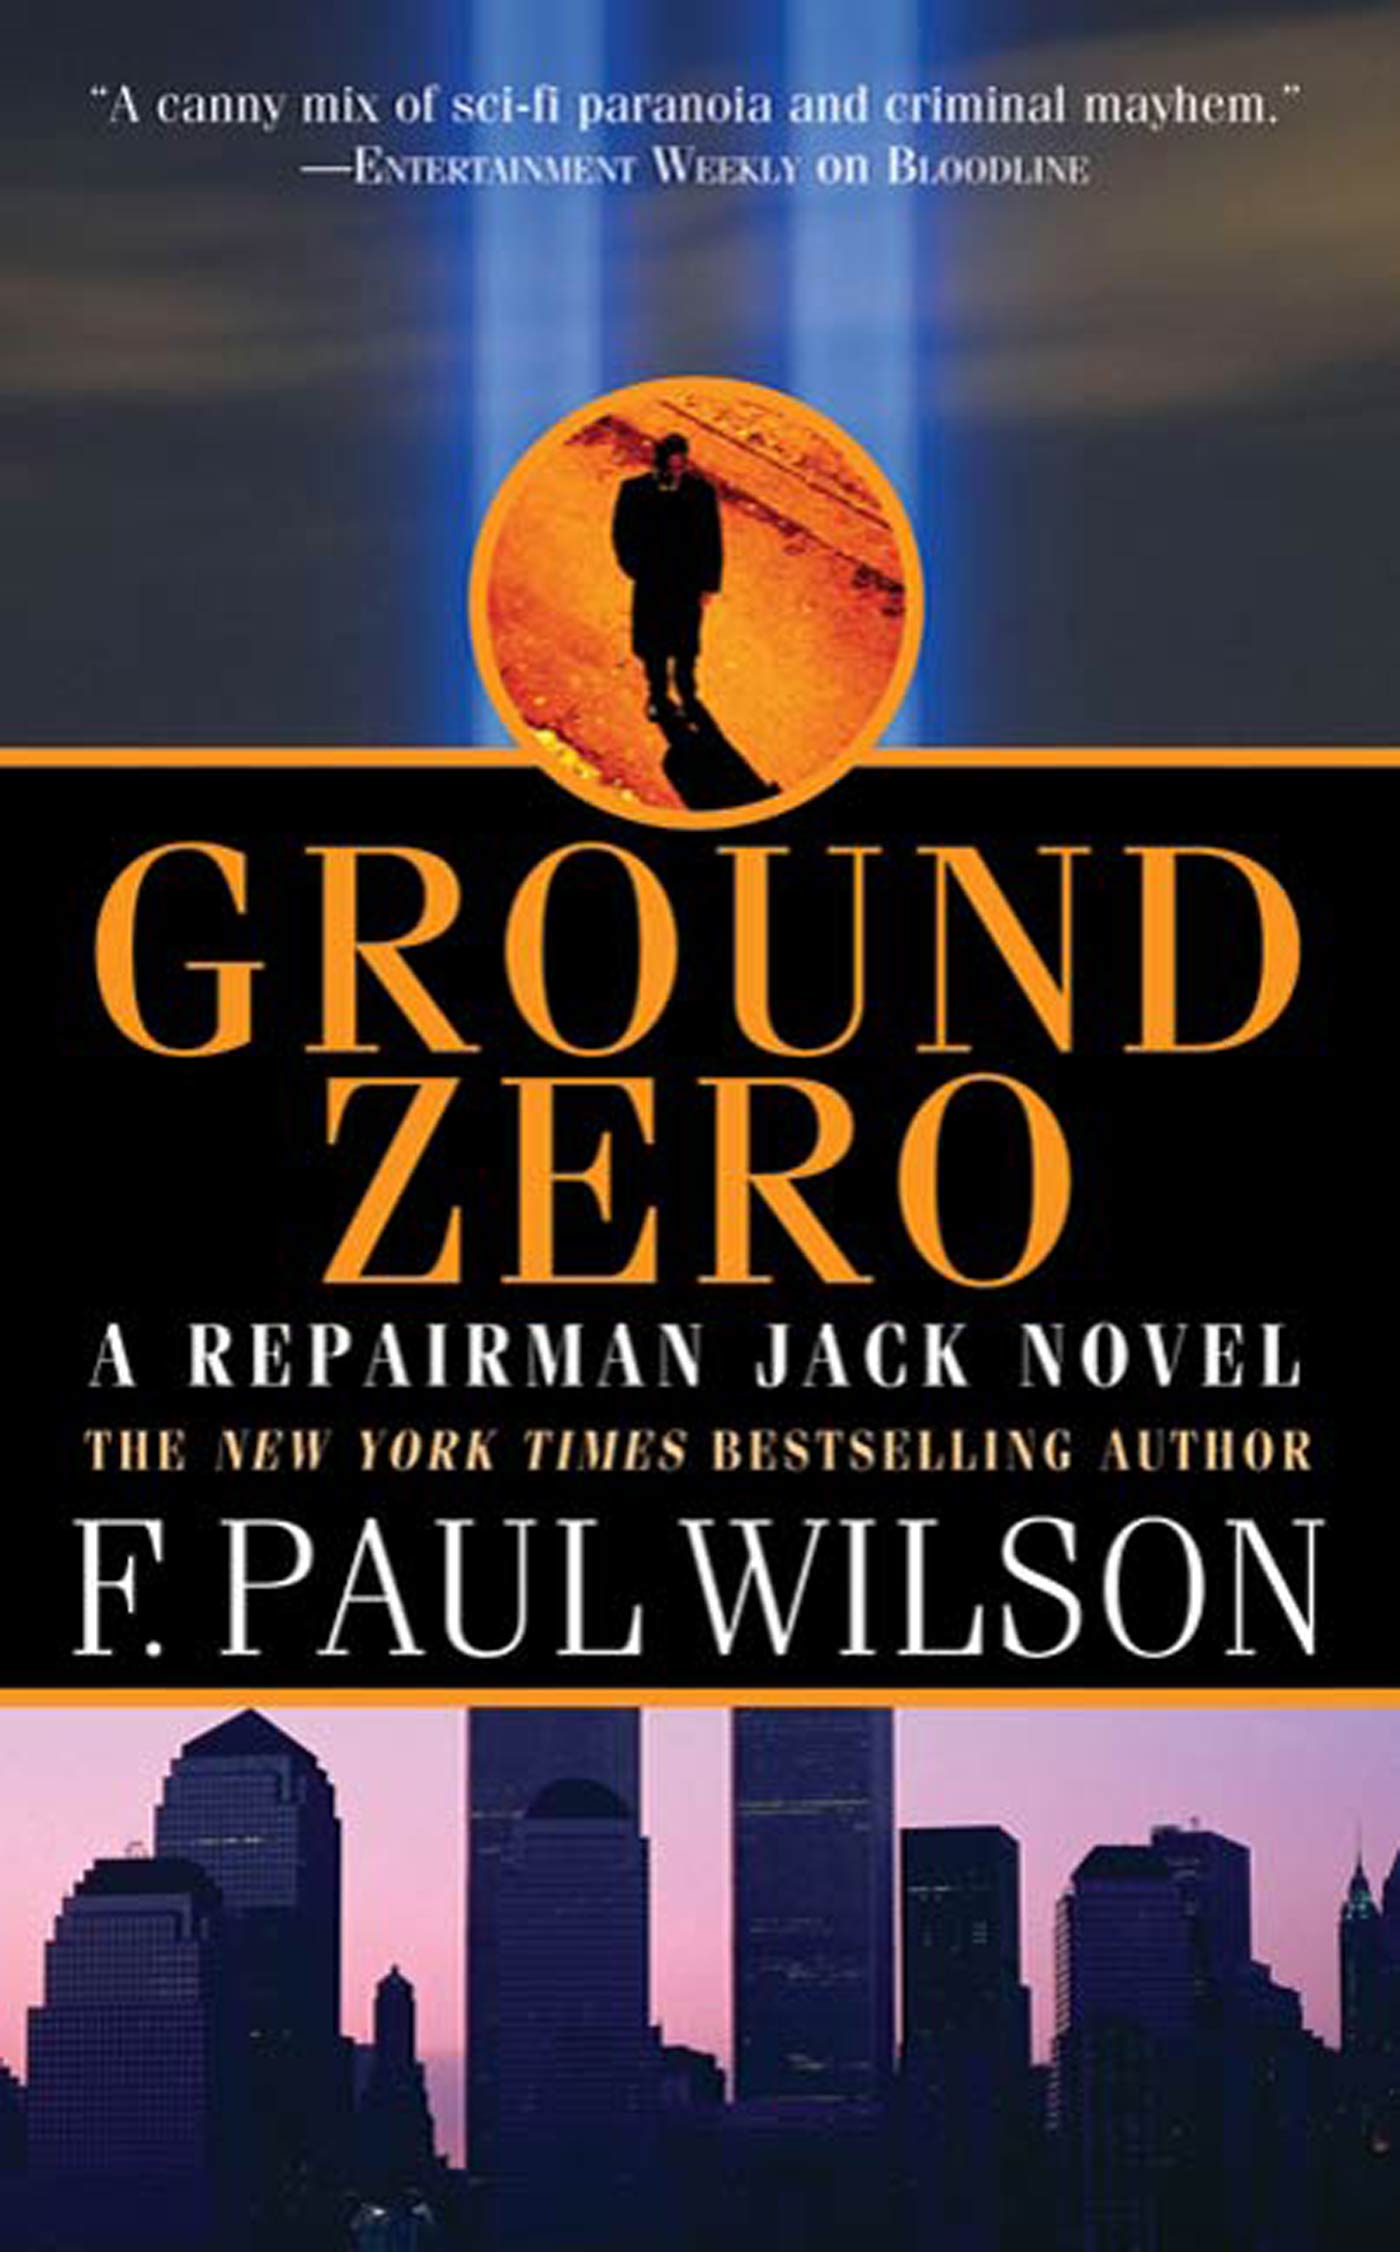 Ground Zero : A Repairman Jack Novel by F. Paul Wilson